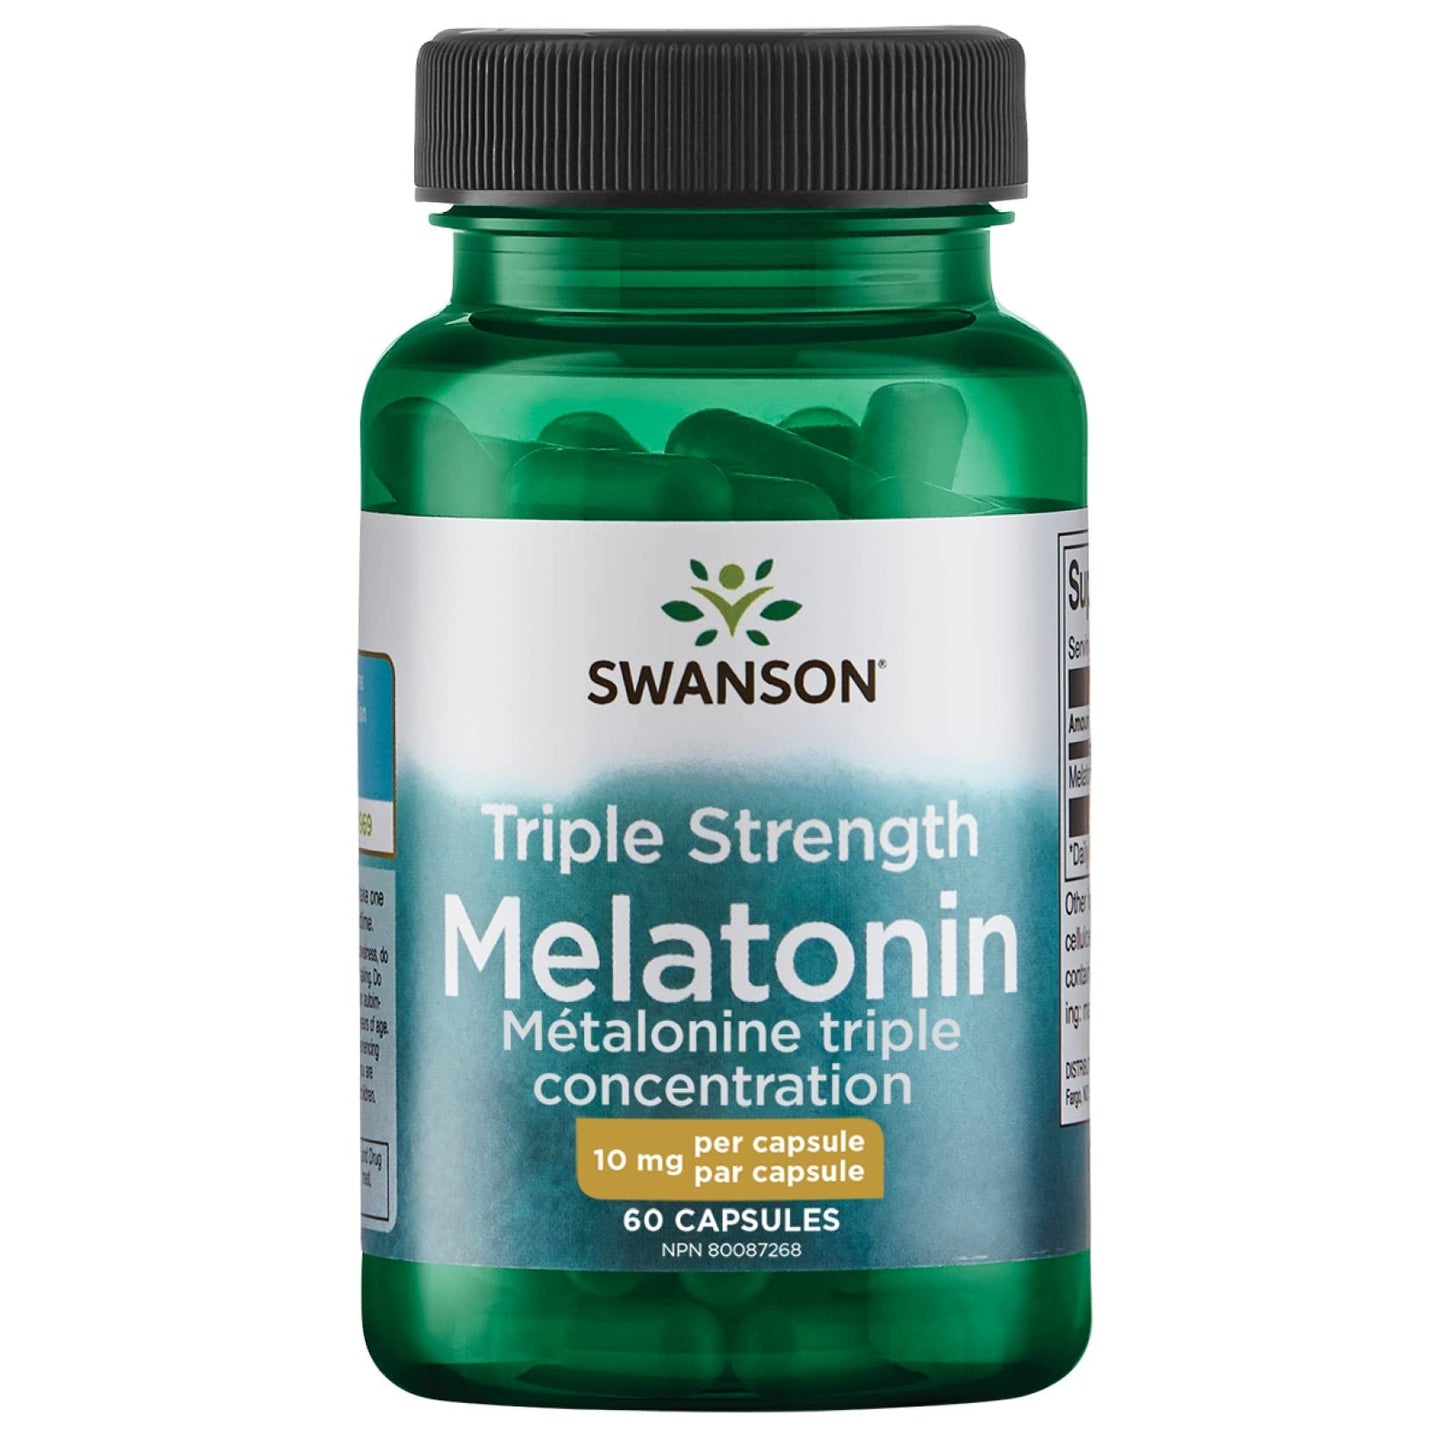 Swanson Triple Strength Melatonin - Natural Sleep Support 60CAPS 10MG